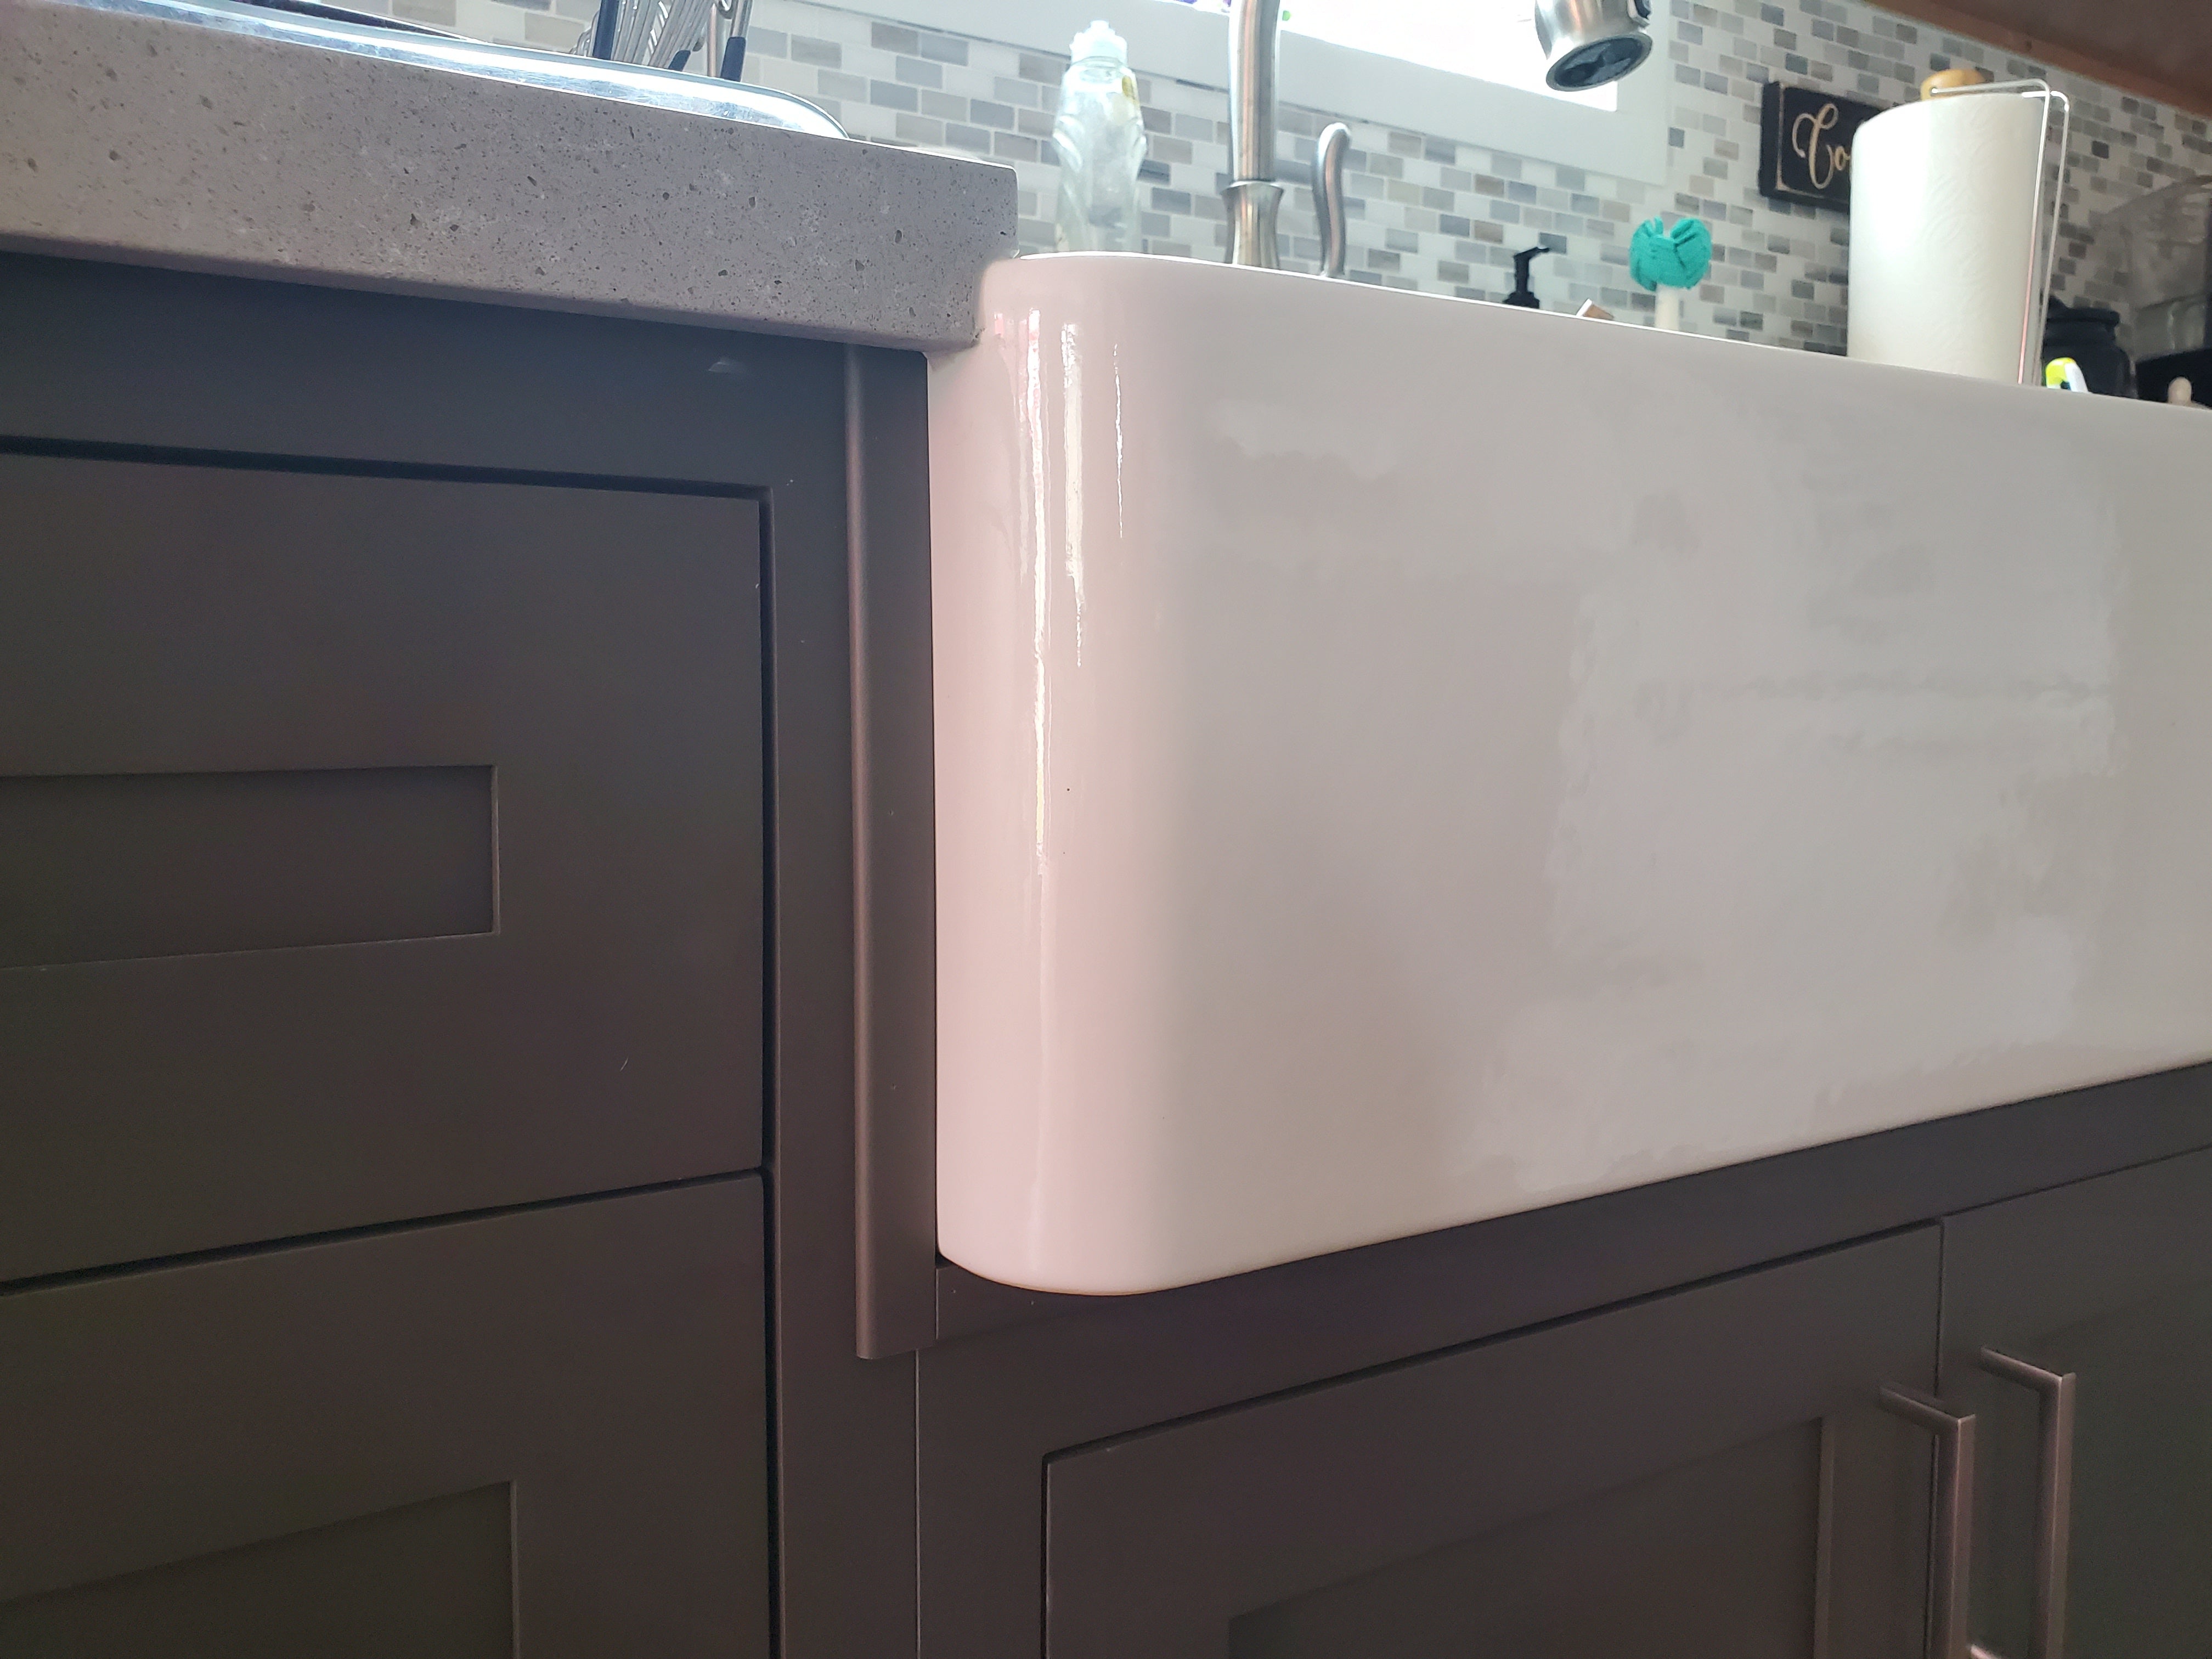 Farm Sink Base Vintage White Inset Raised Panel Cabinets 33" or 36"